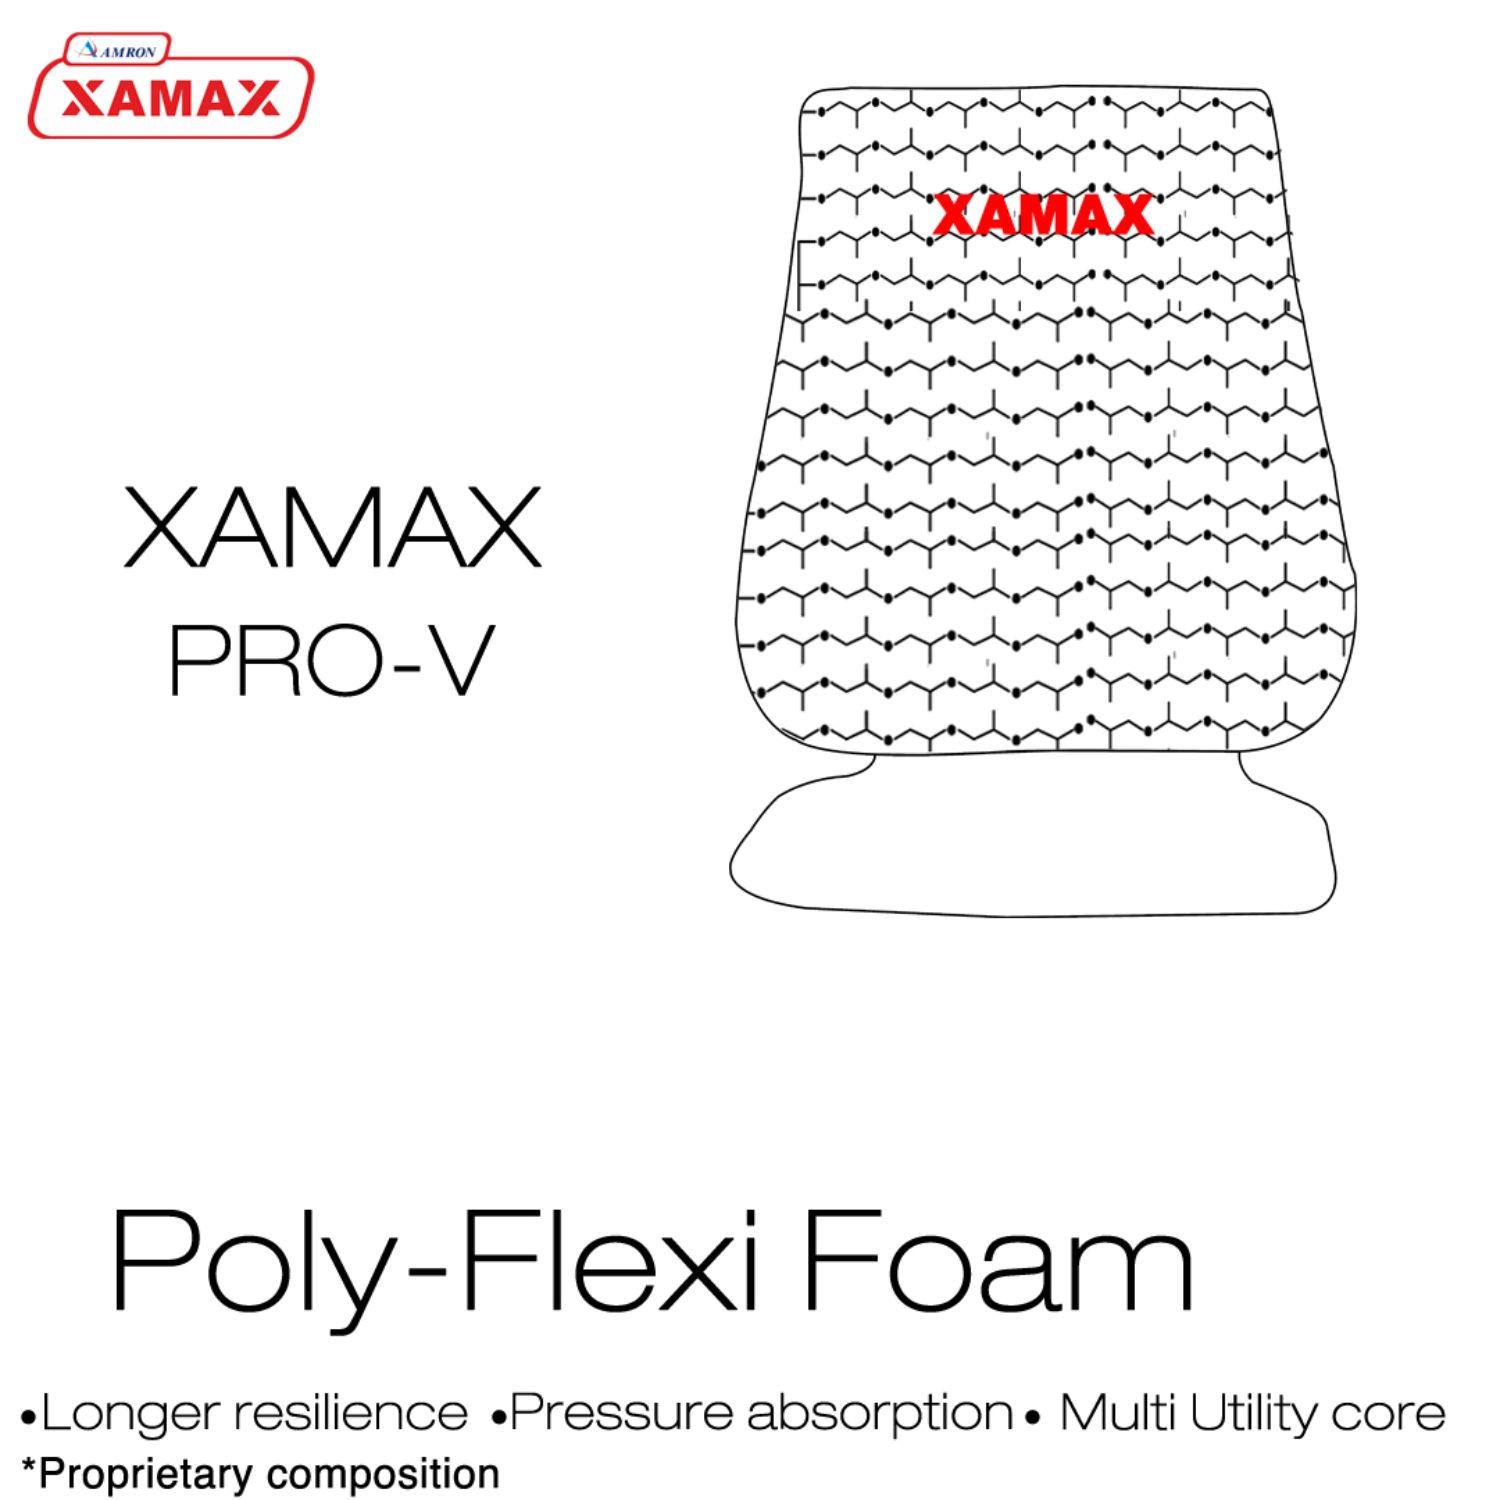 Xamax Pro V Backrest With Extra Seating Cushion (Grey)